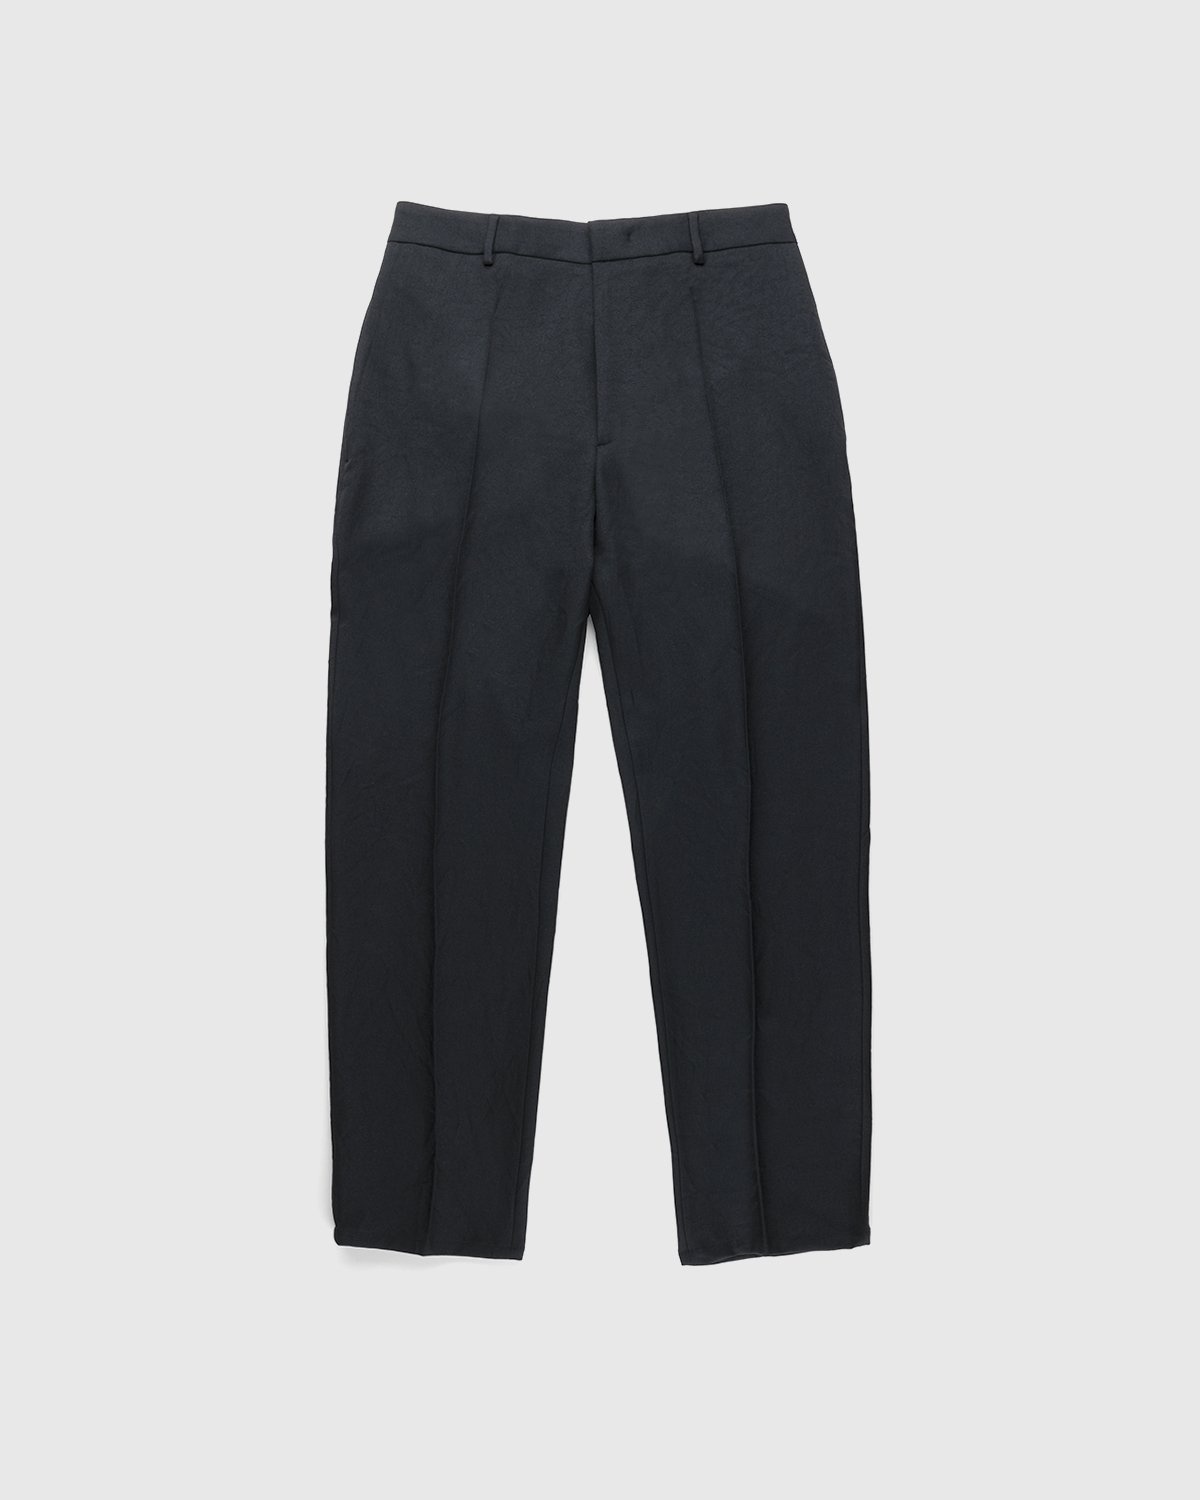 Jil Sander – Trousers Black - Trousers - Black - Image 1